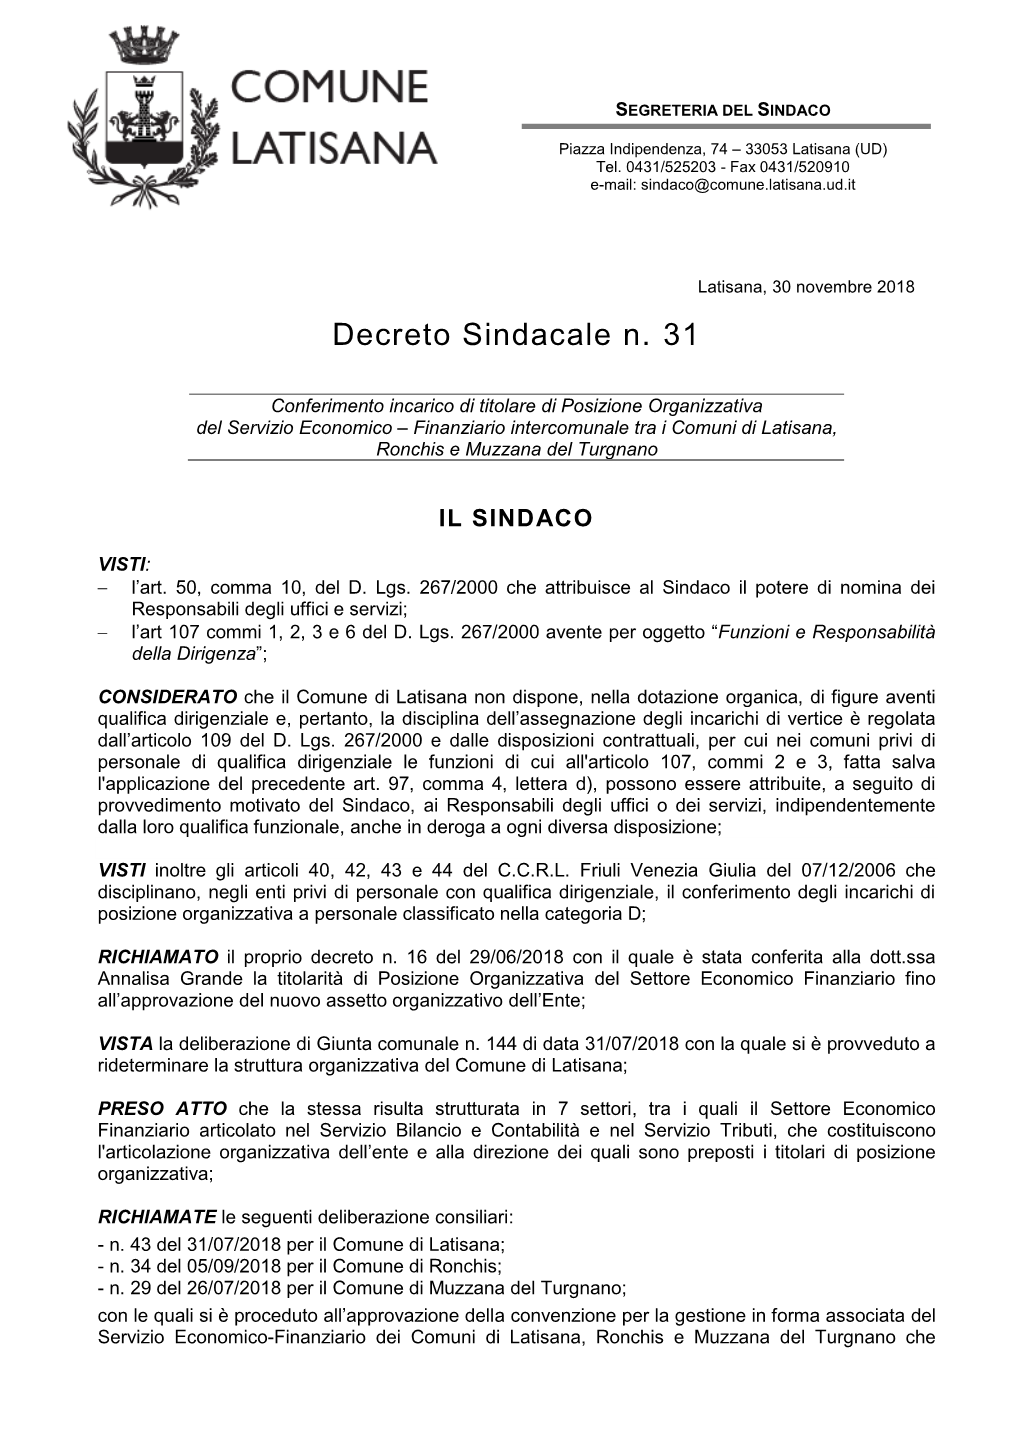 Decreto Sindacale N. 31